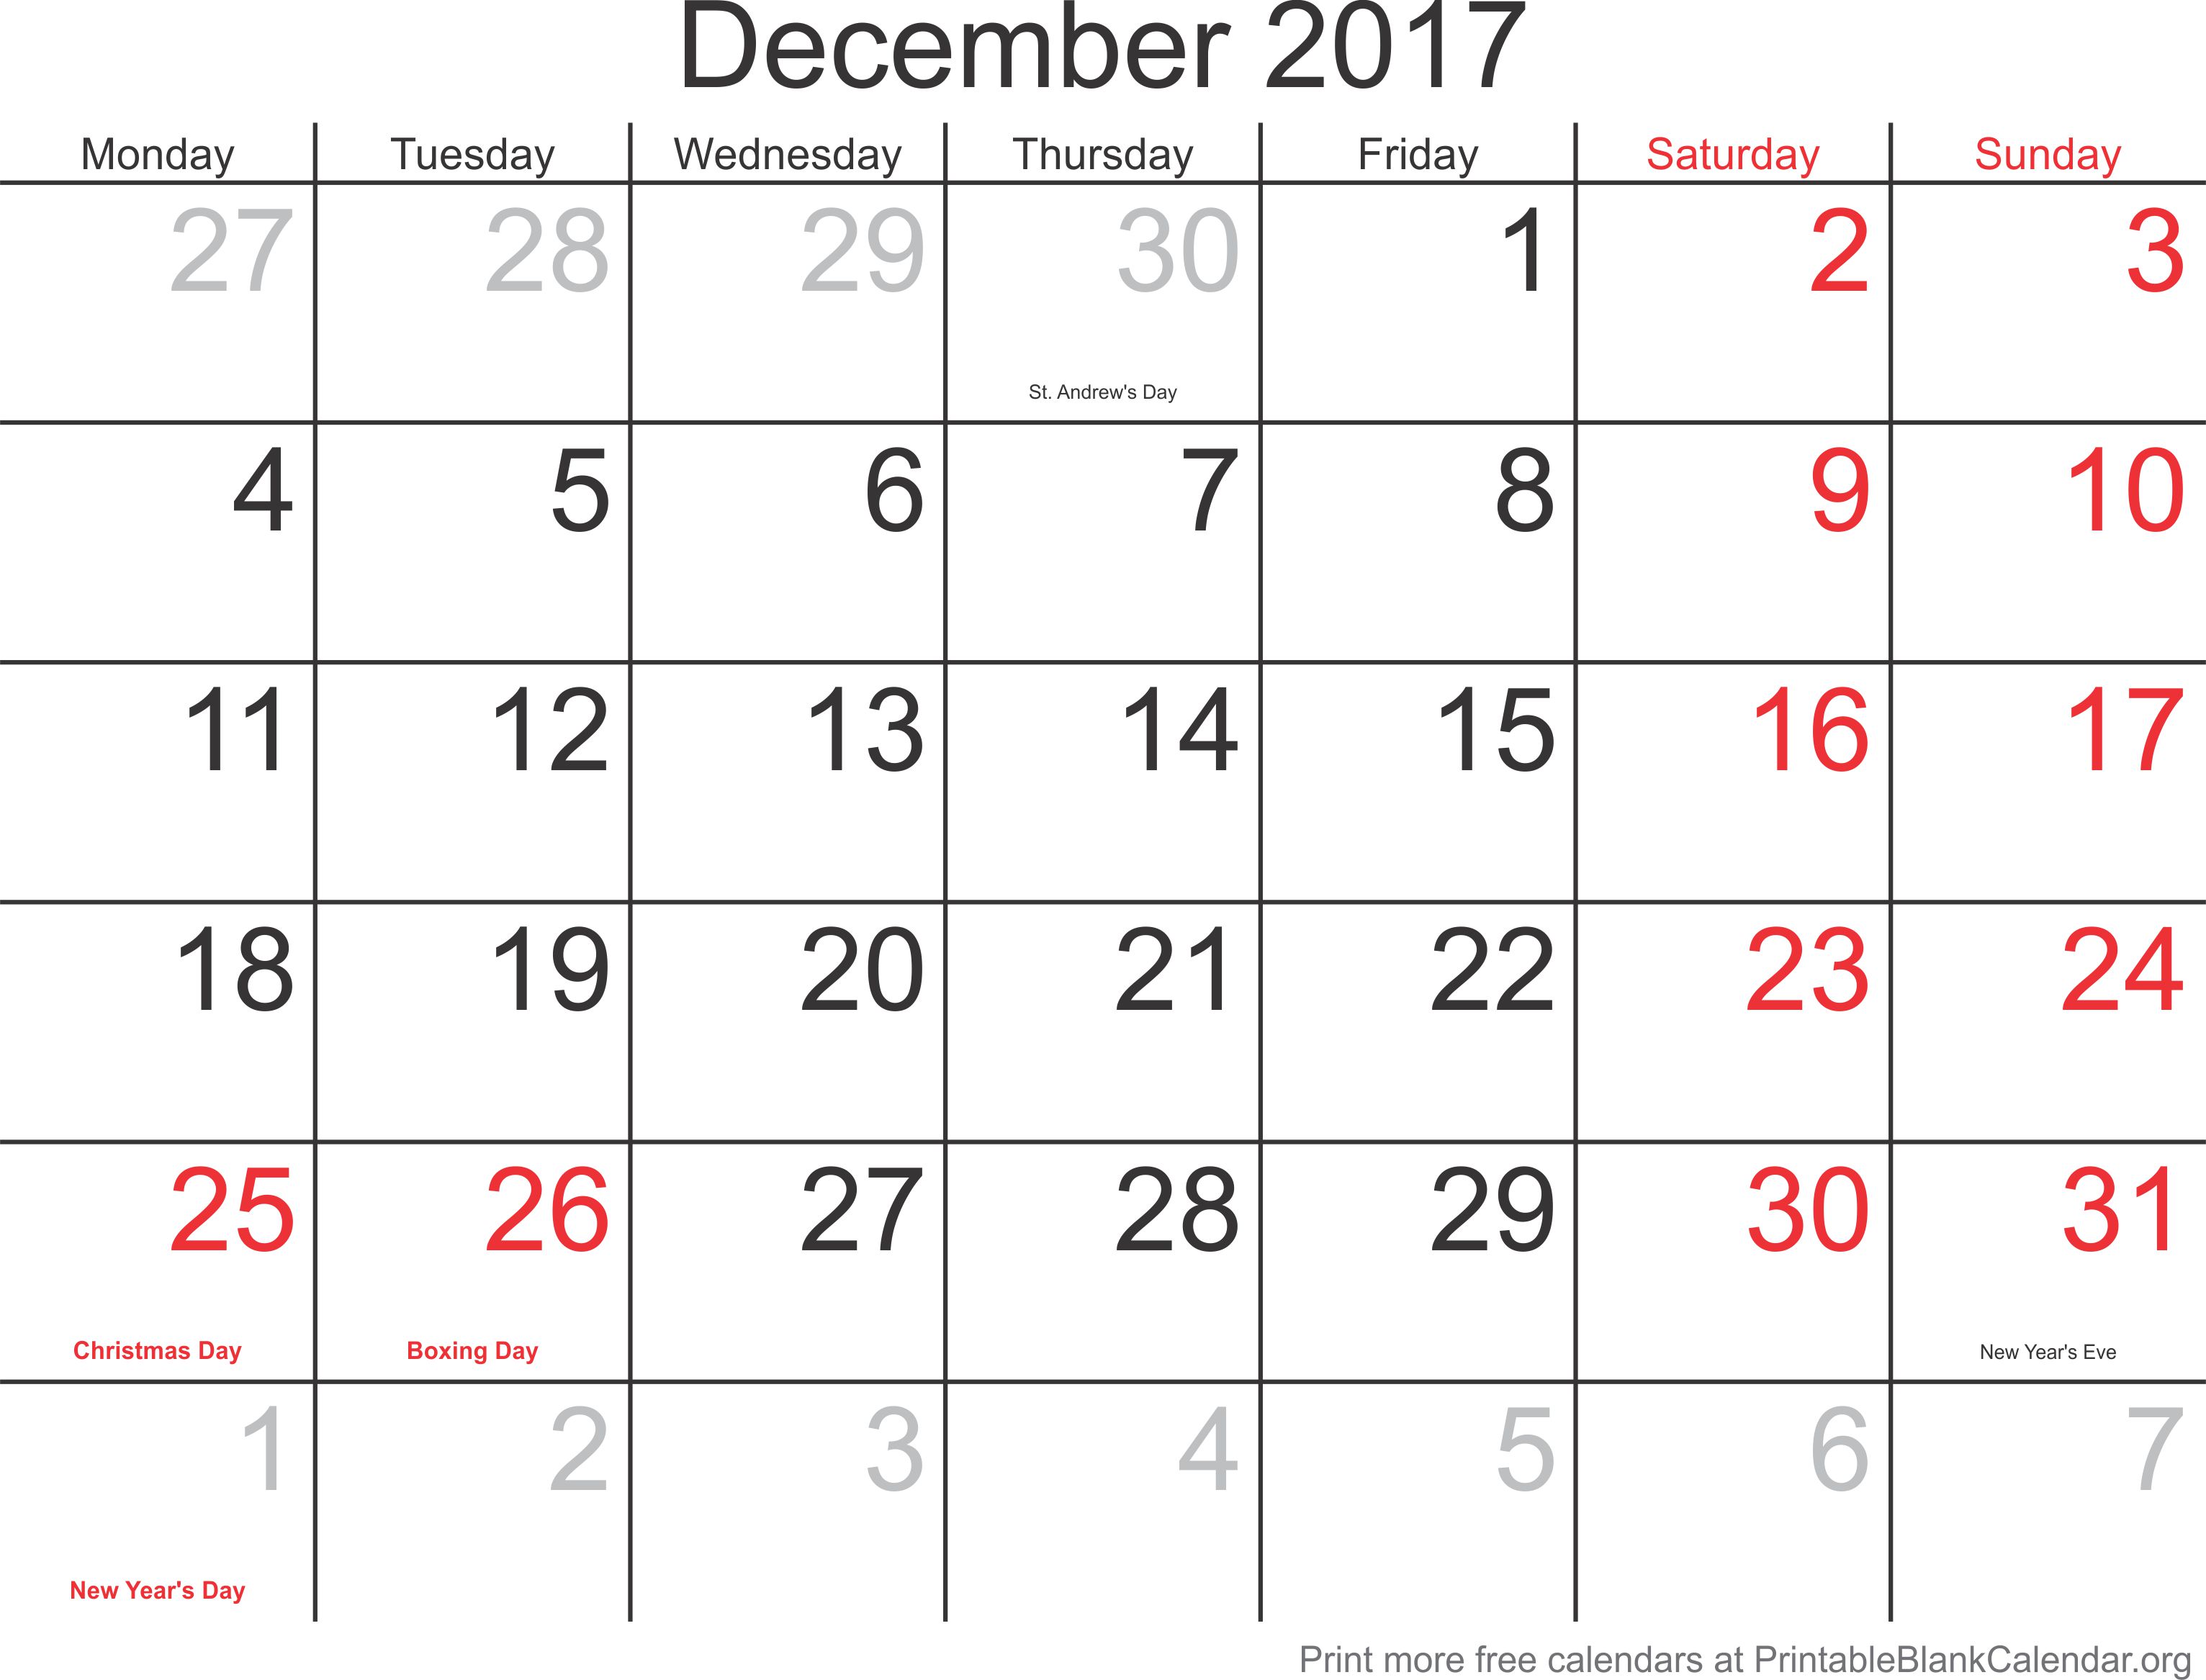 December 2017 Free Printable Calendar Printable Blank Calendar org